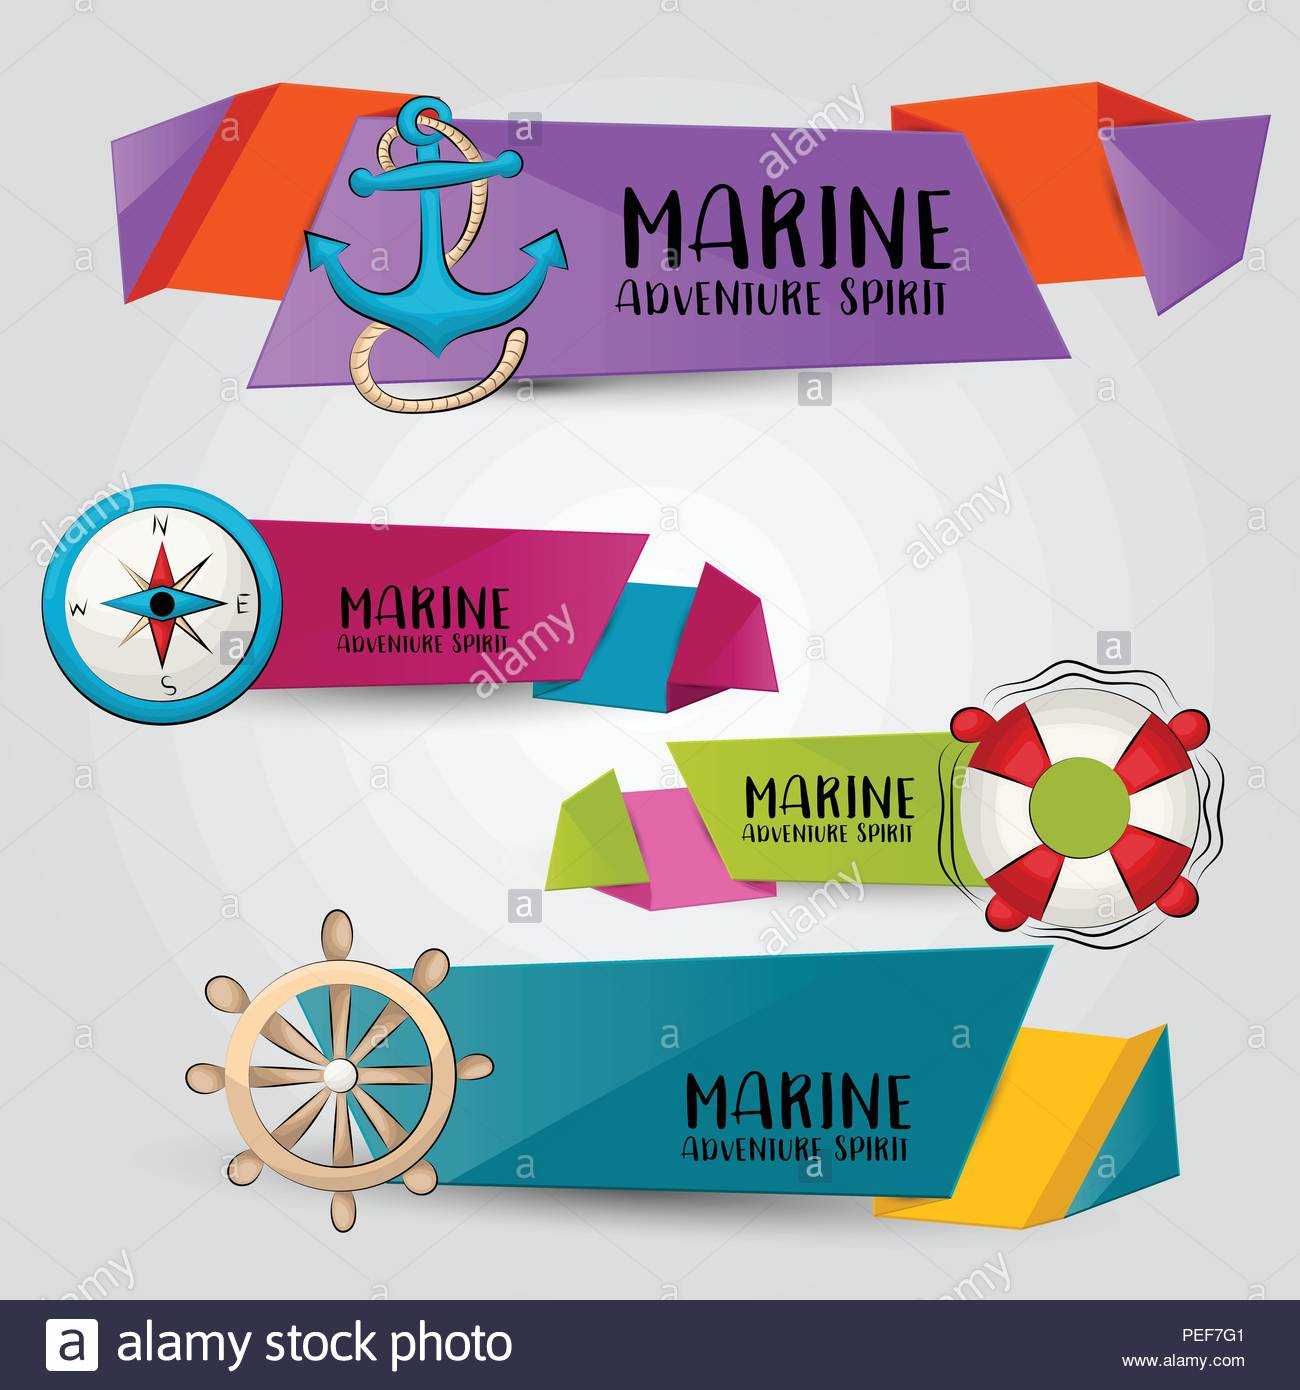 Marine Nautical Travel Concept. Horizontal Banner Template Intended For Nautical Banner Template